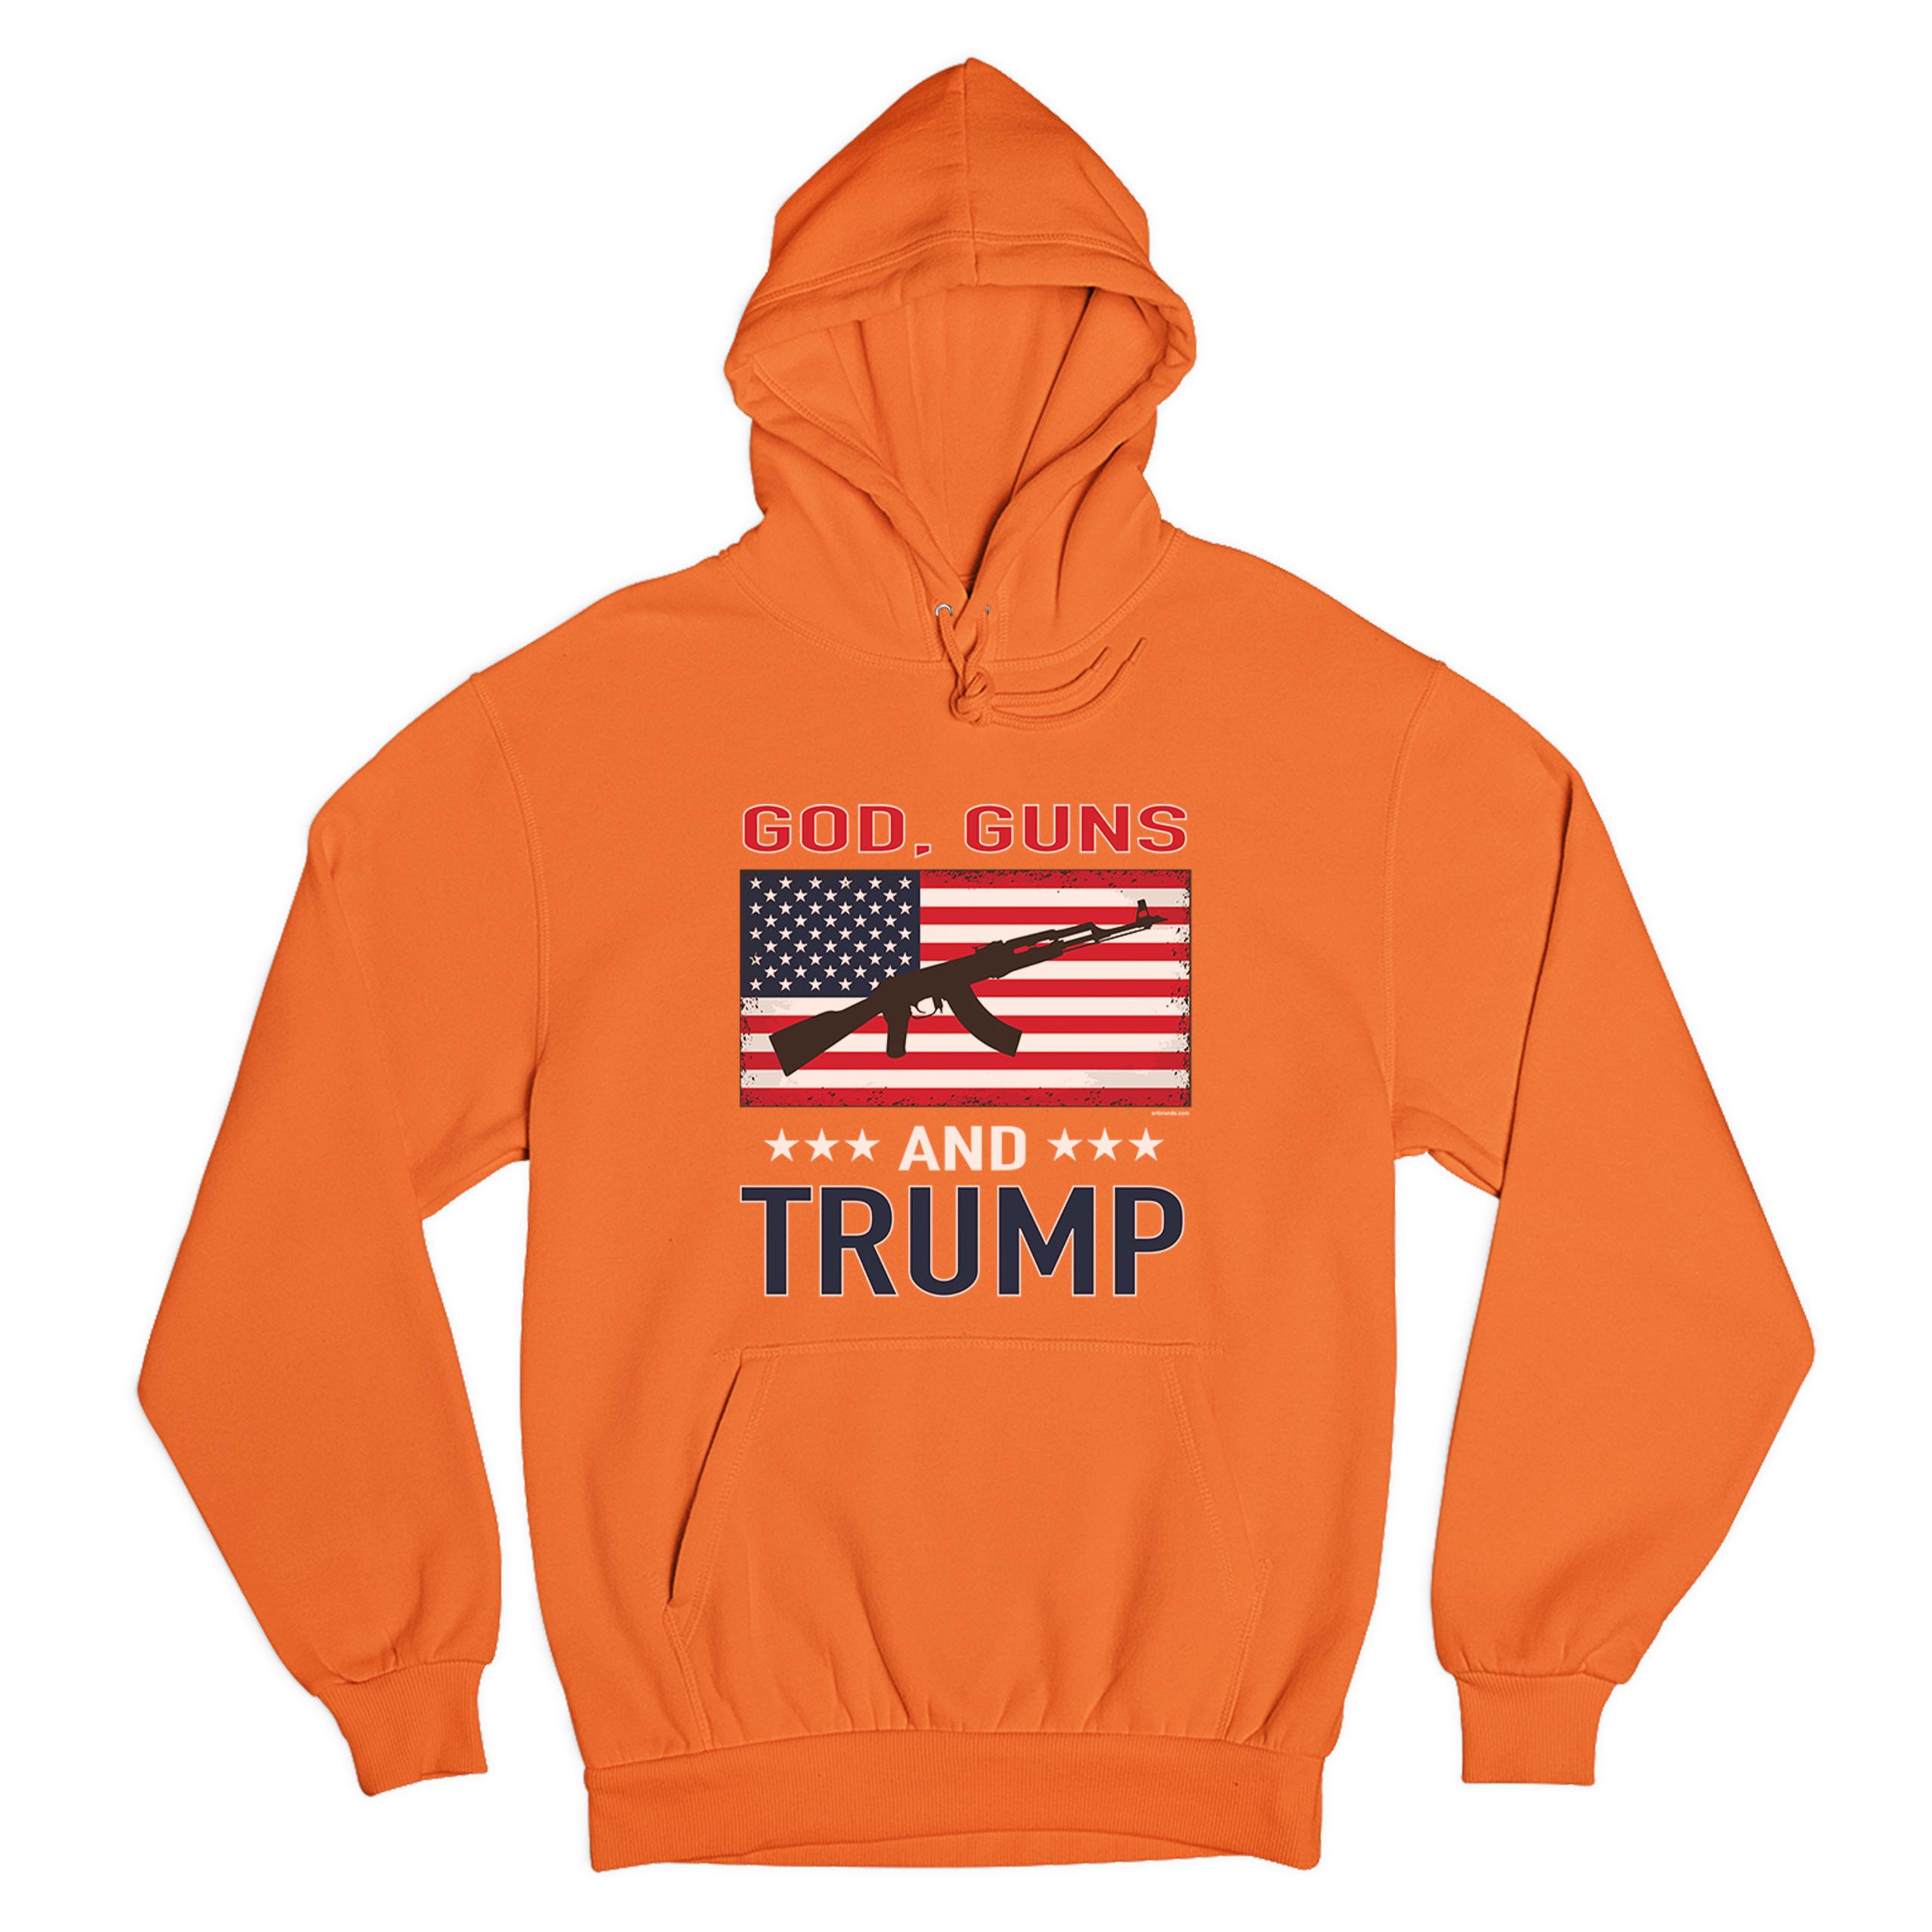 Make America Great Again Hoodie American Eagle Trump Flag Funny Tee Sweater 